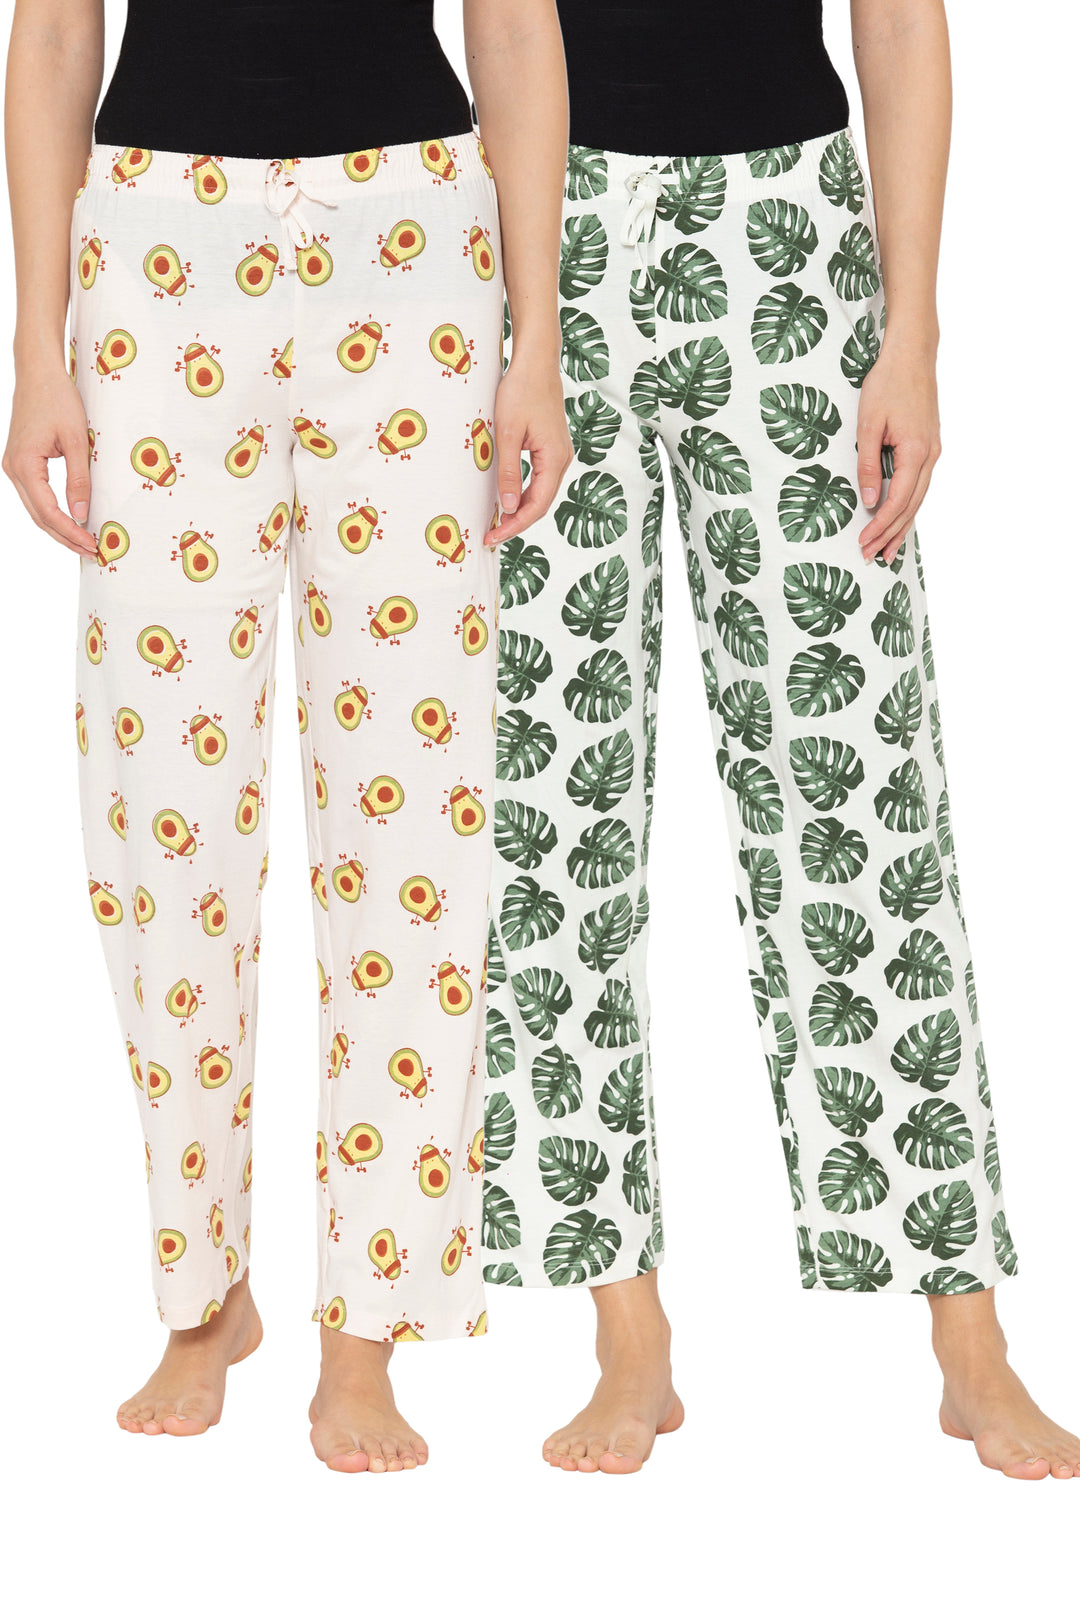 CafePress Happy Green Frog Pajamas Women's Comfortable PJ Sleepwear  (1326267933)